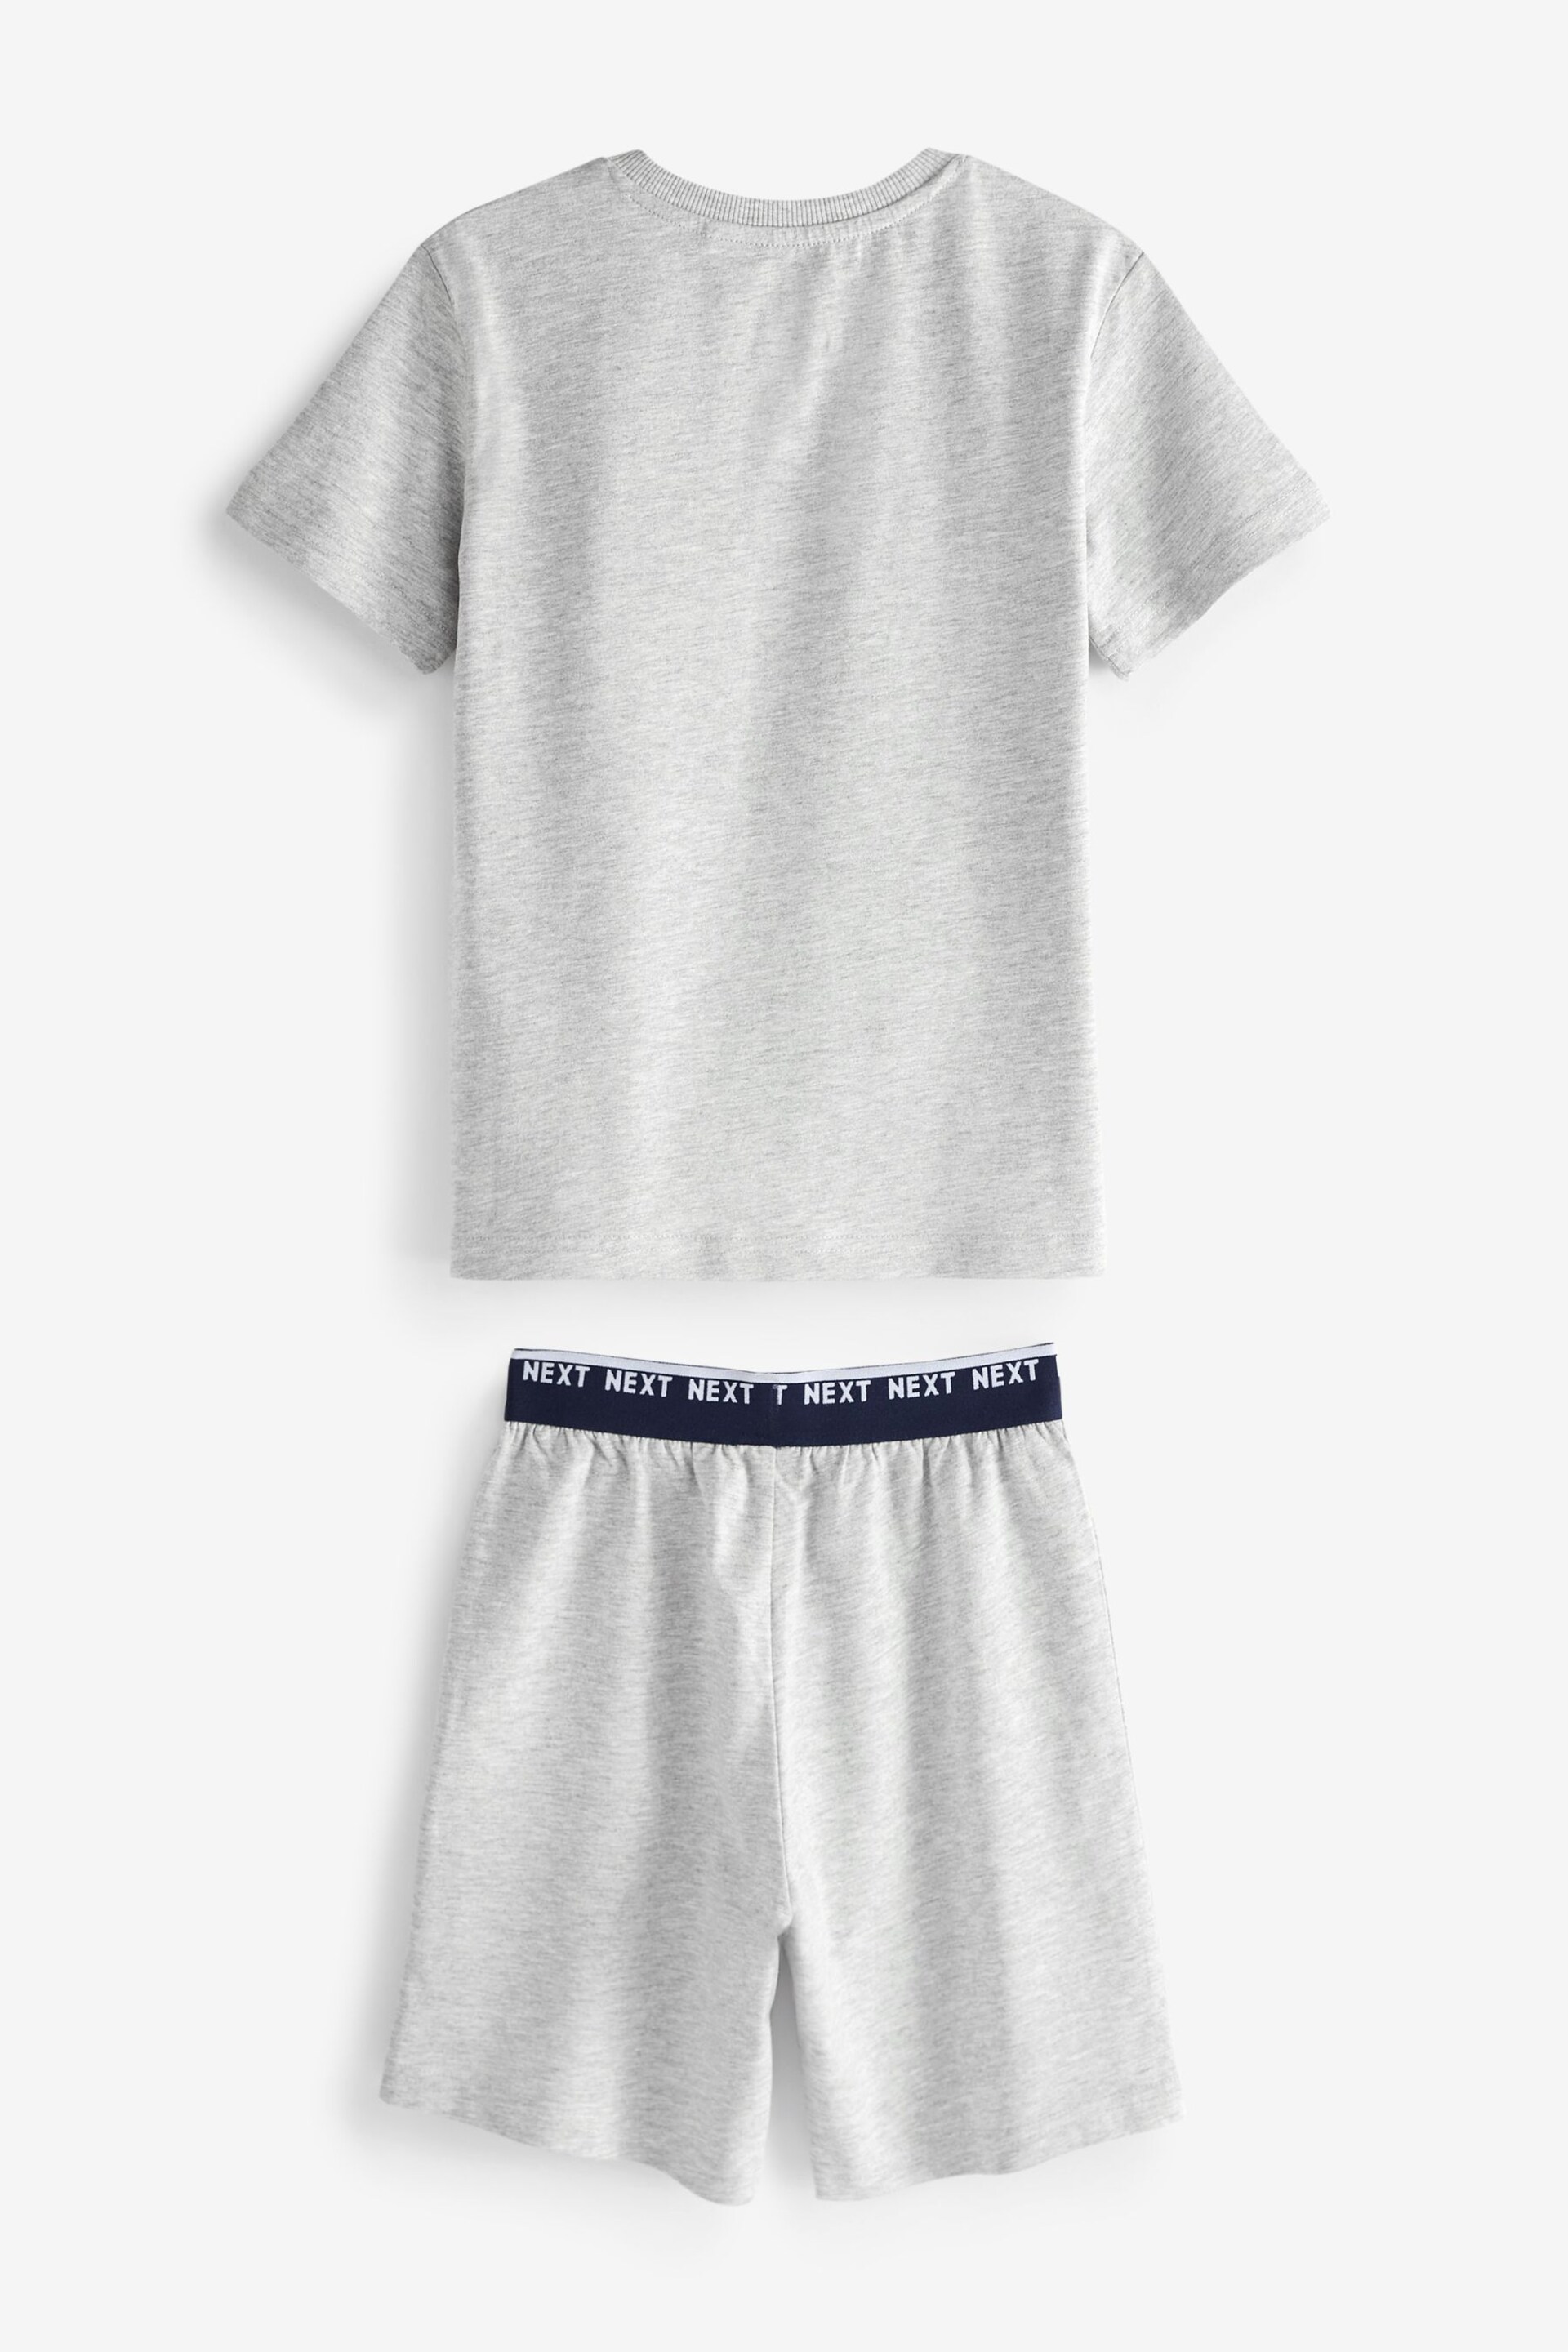 Blue/Grey Plain Short Pyjamas 2 Pack (3-16yrs) - Image 2 of 3